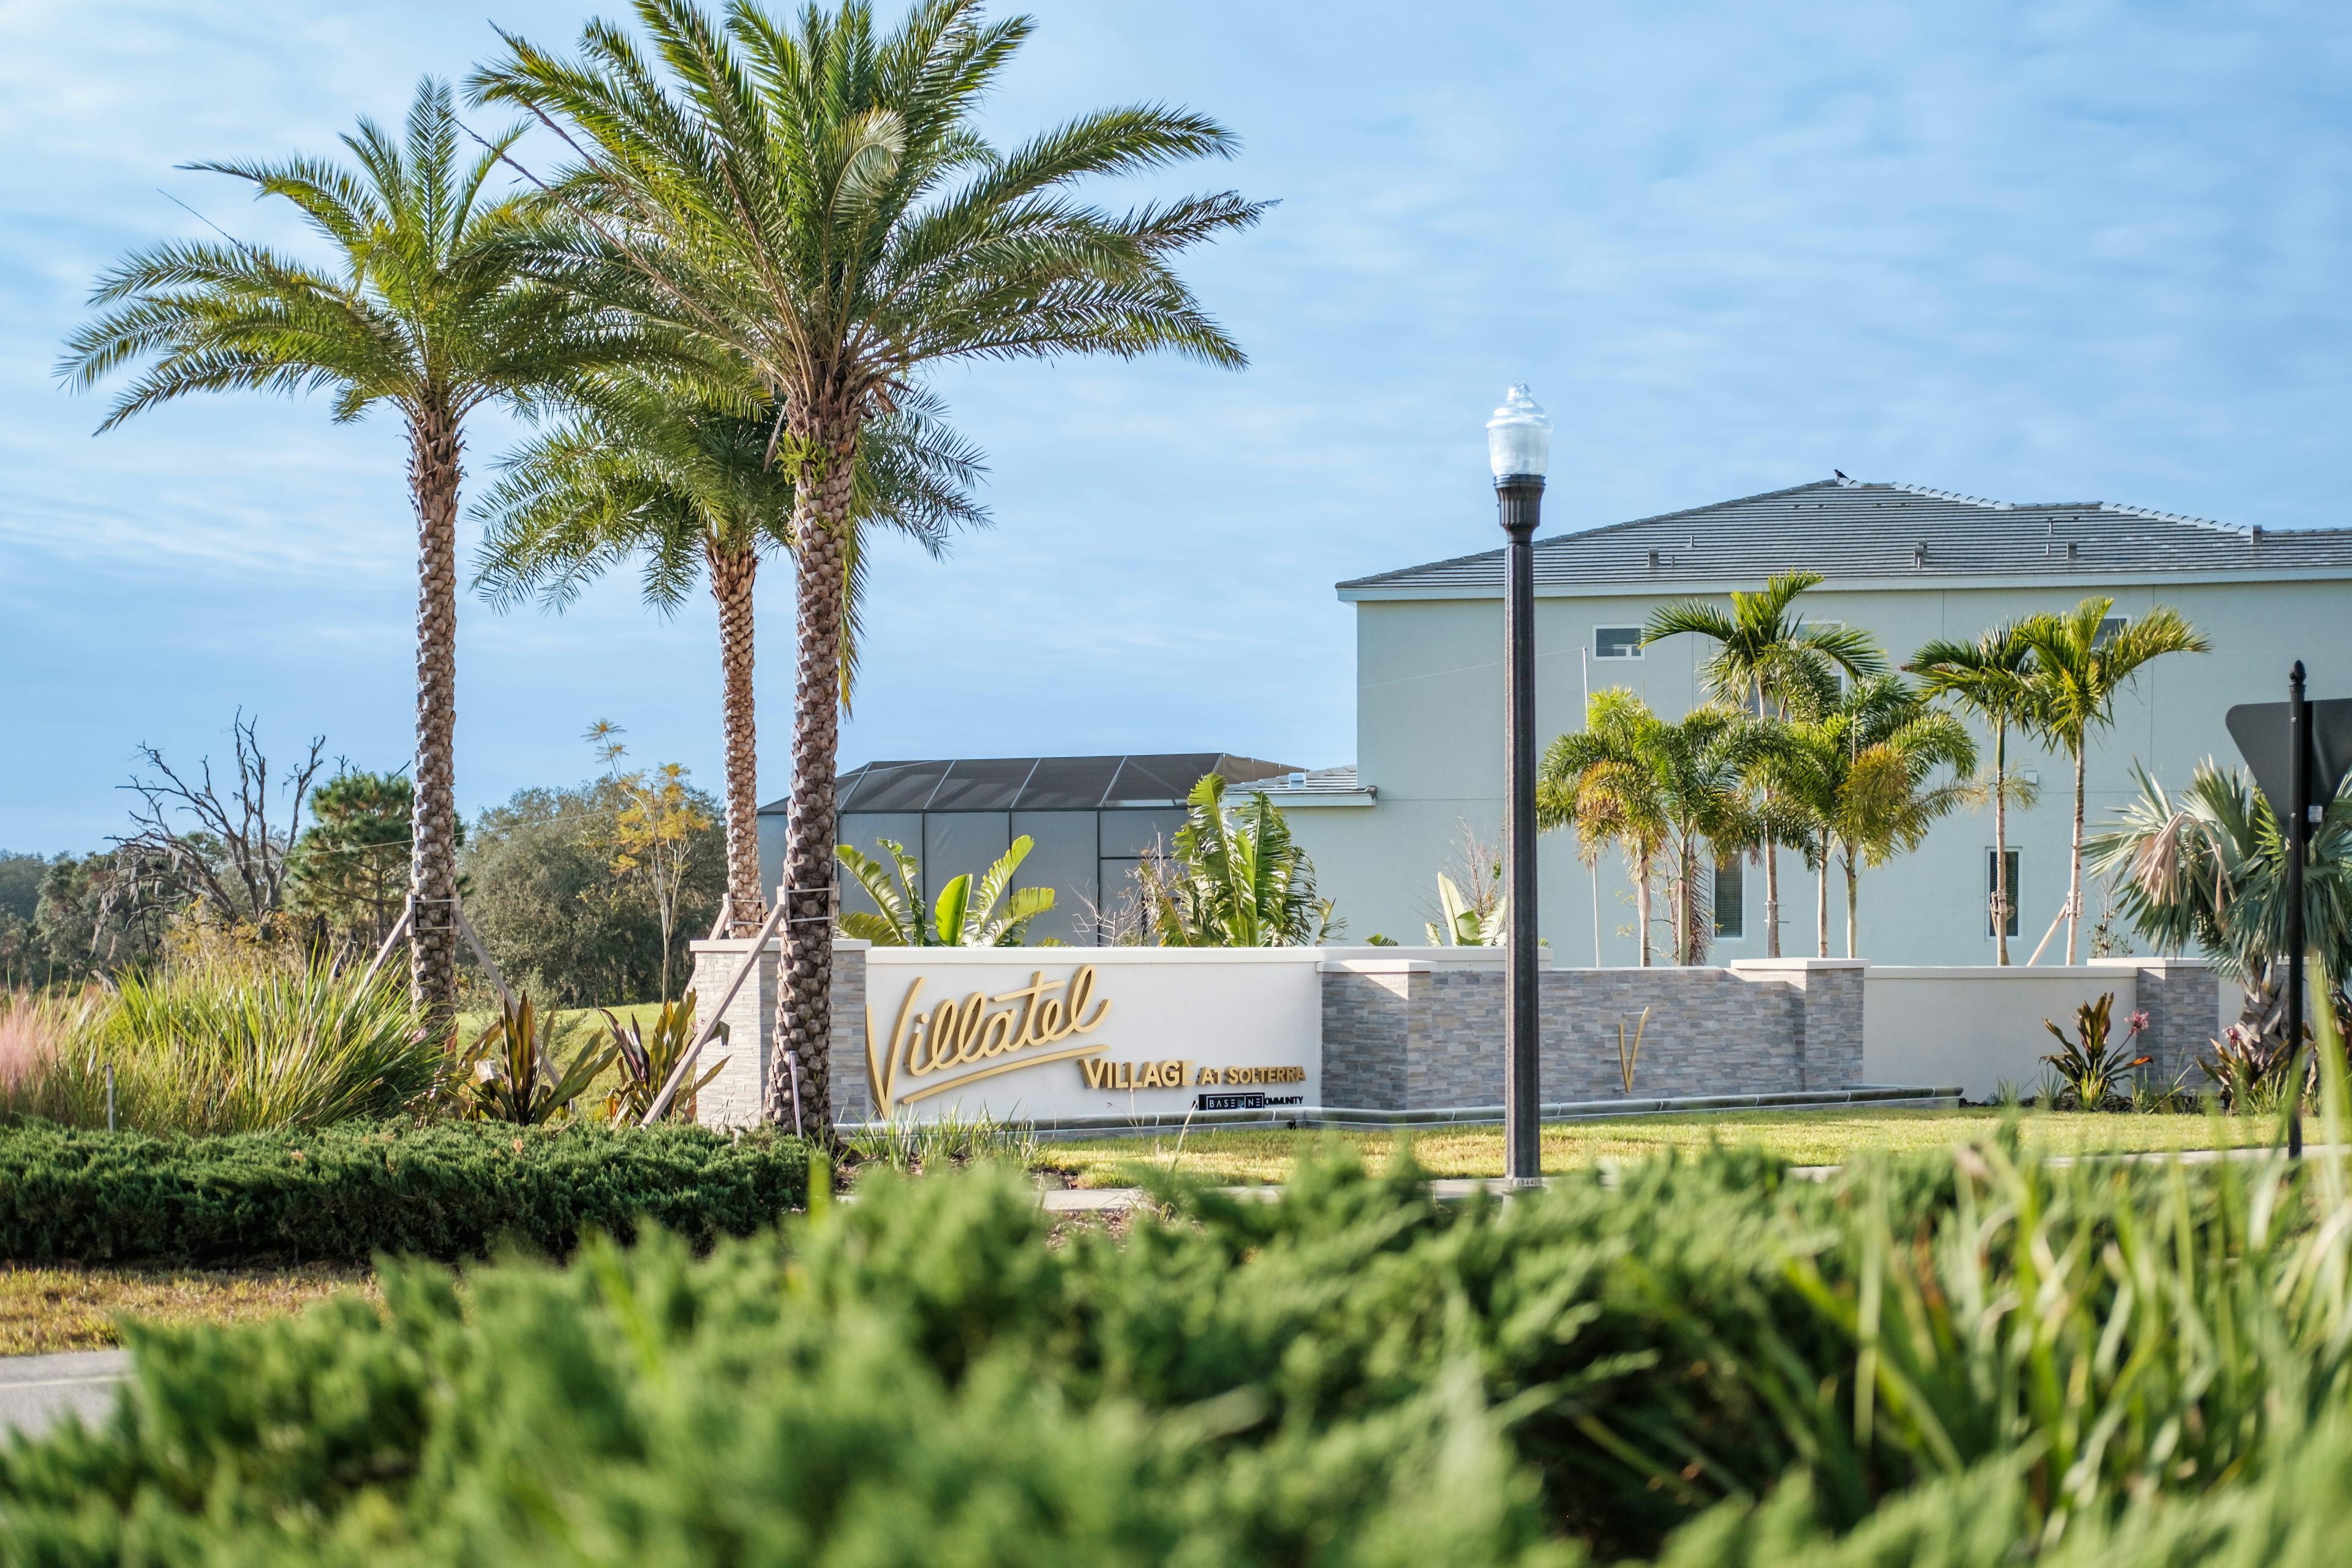 An ariel shot of Villatel Village at Solterra Resort in Orlando